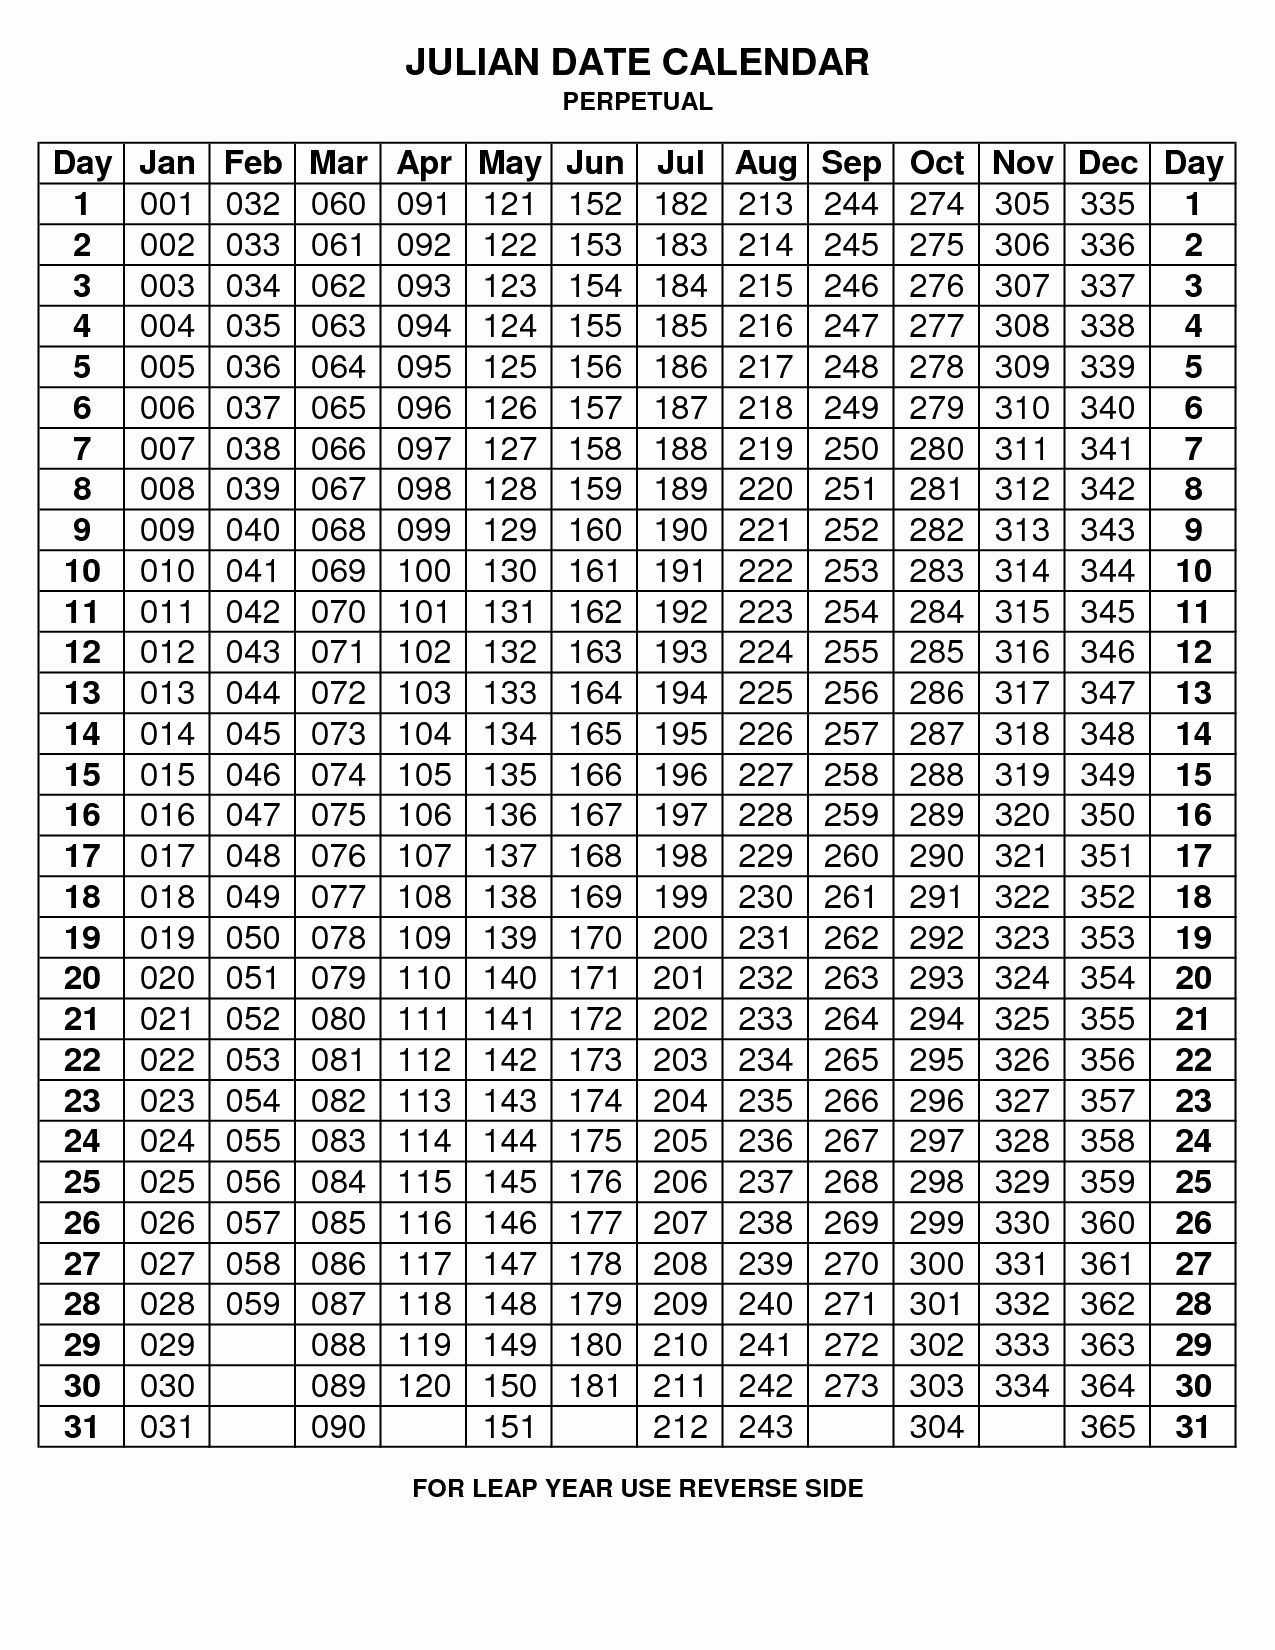 Printable Calendar 2018 Julian Dates | Printable Calendar 2019